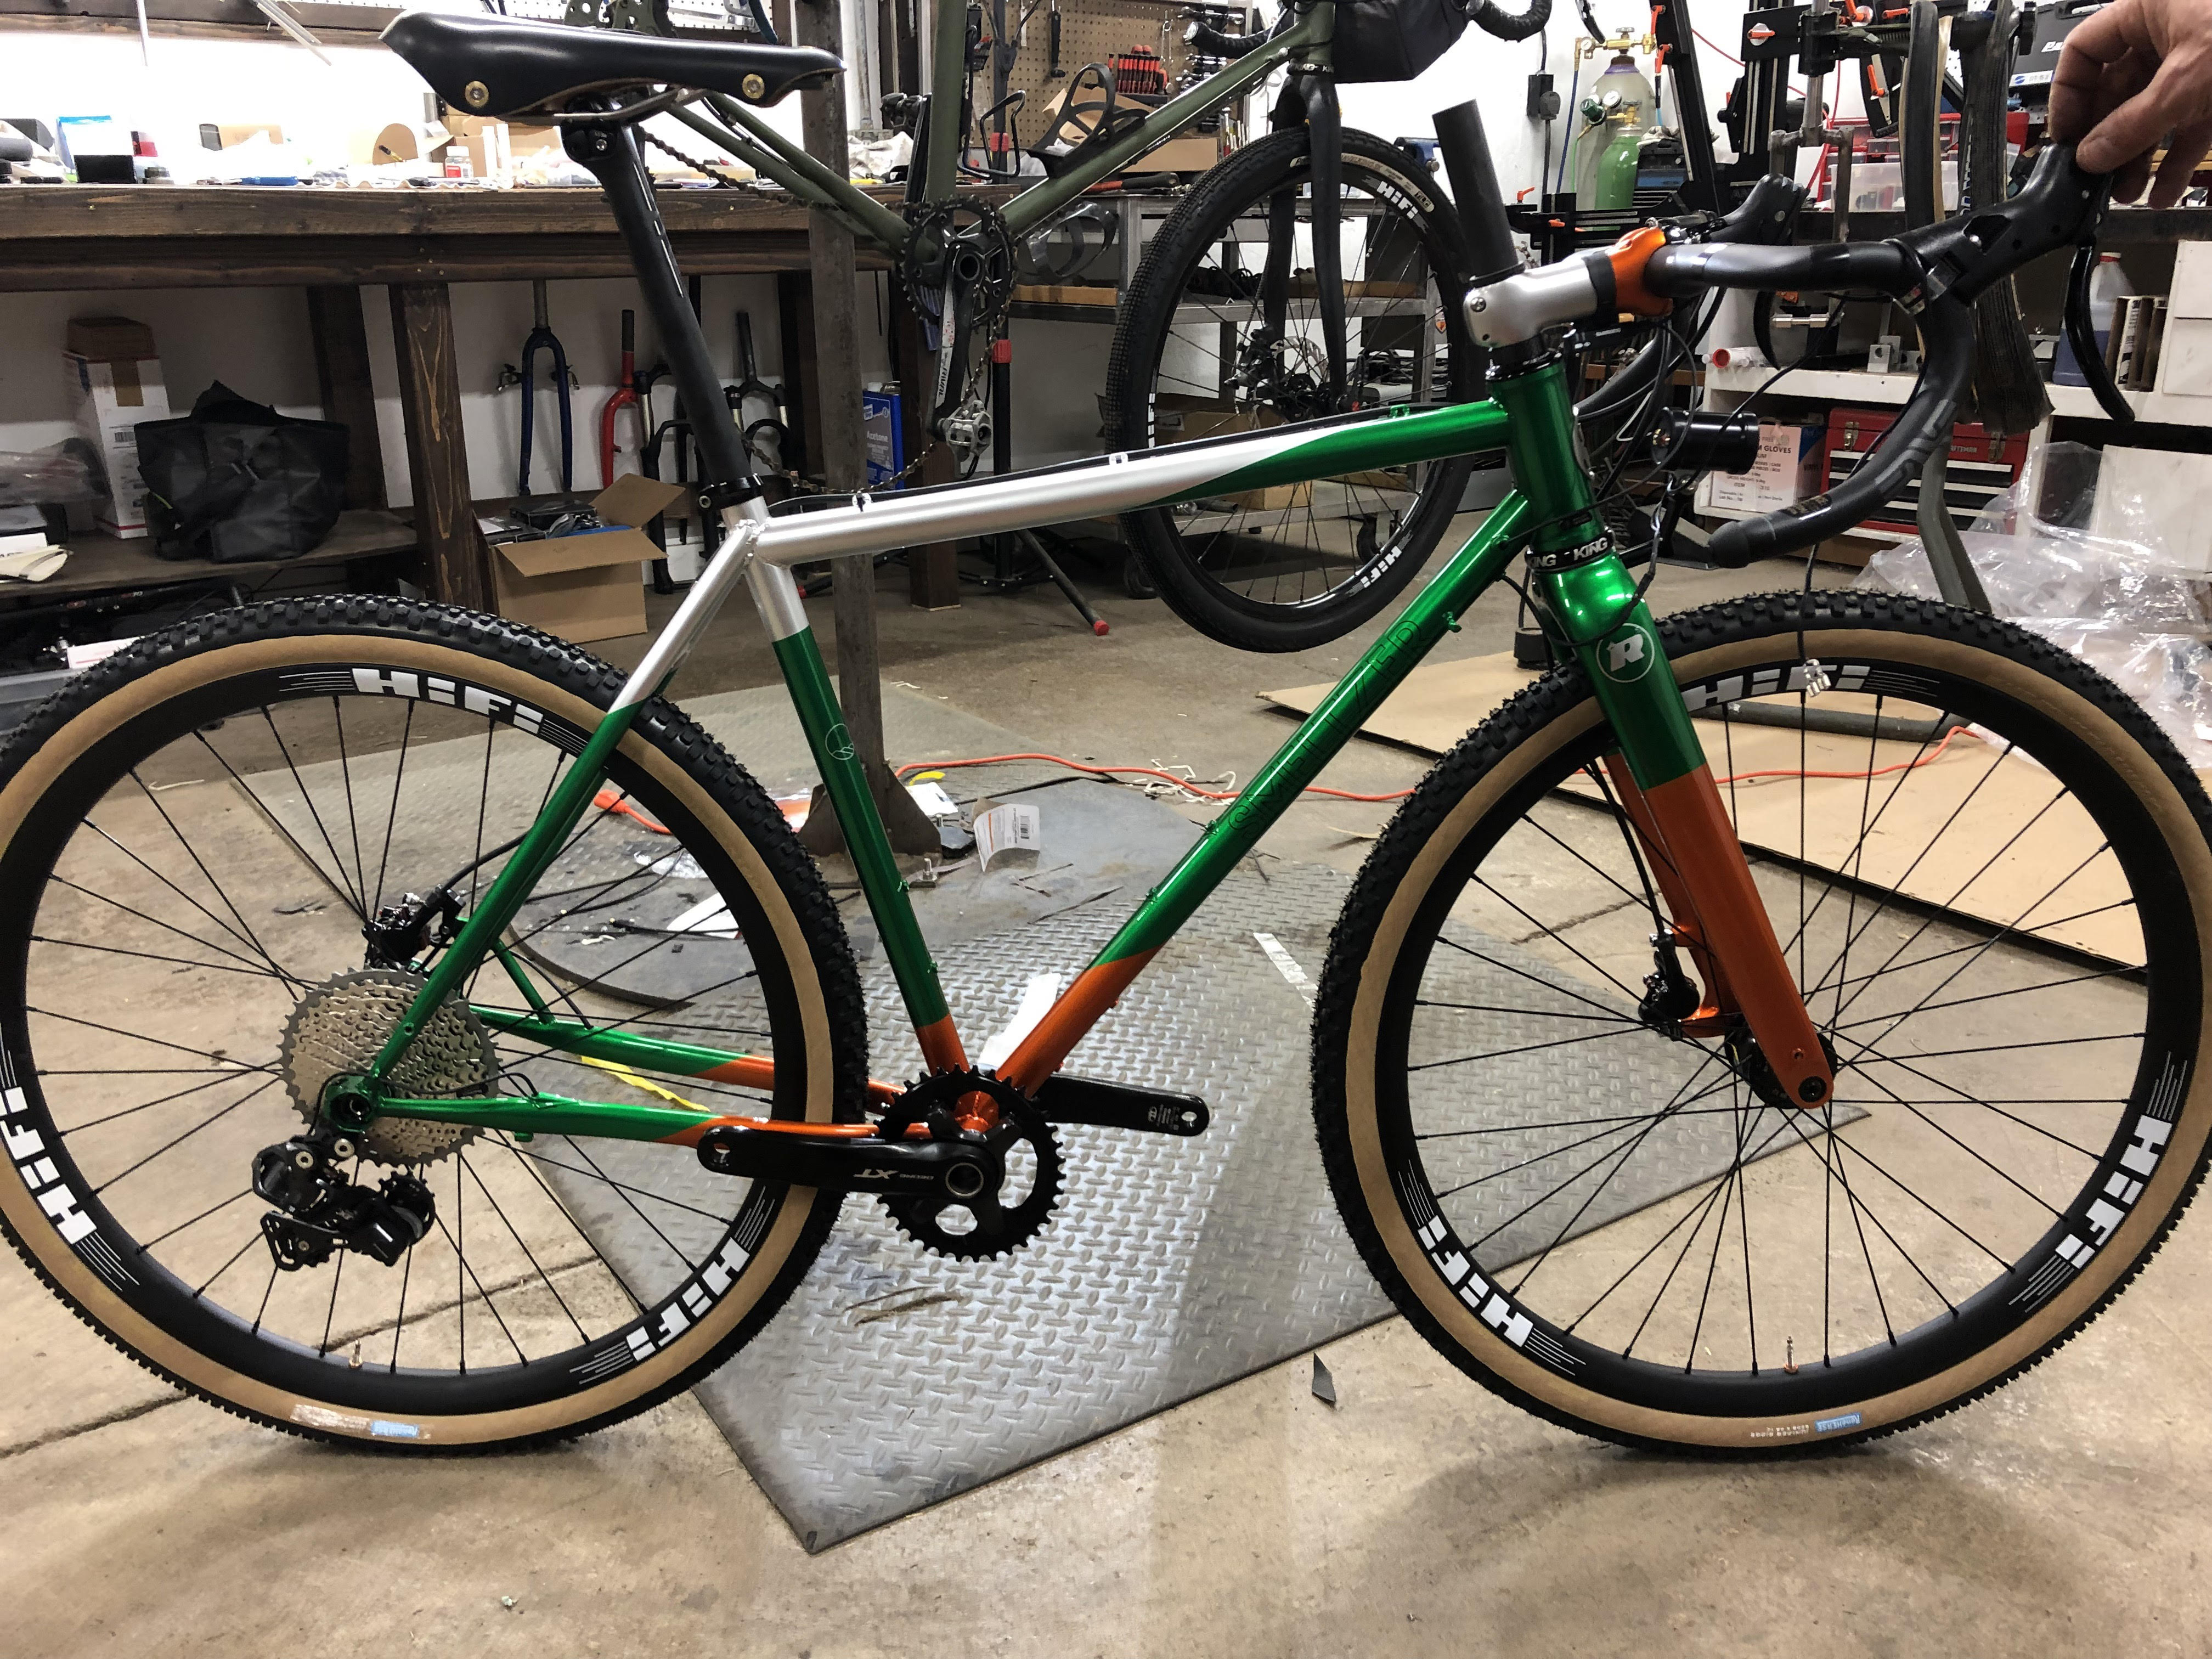 Portland area bike companies in Sacramento for North American Handmade ... - Smeltzer